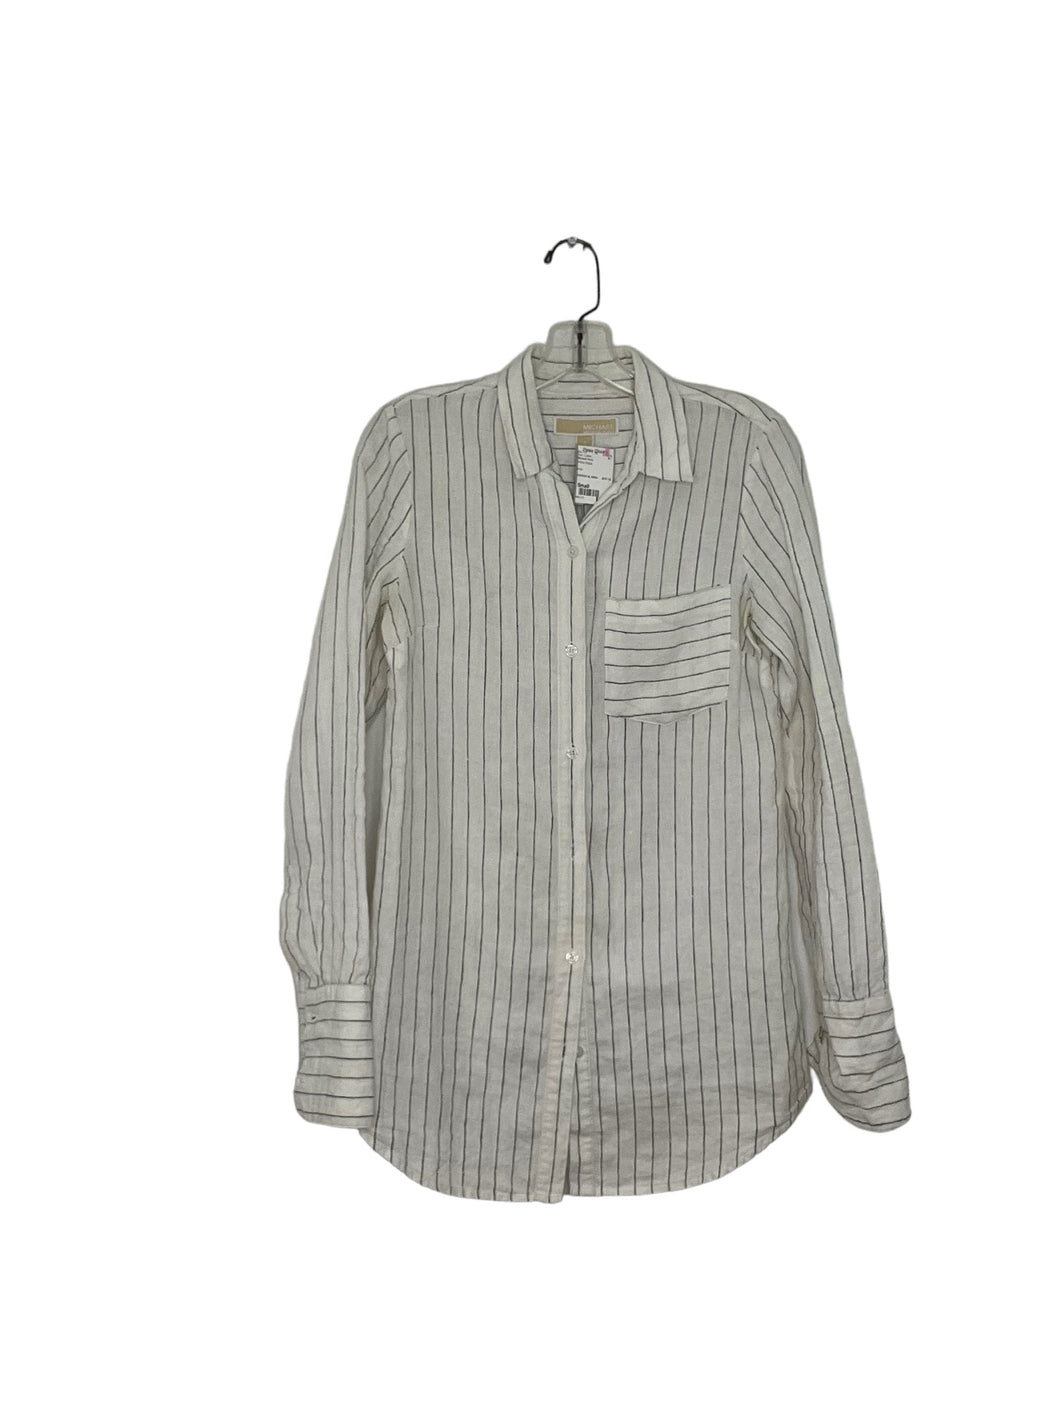 Michael Kors Size Small White Stripe Shirt- Ladies